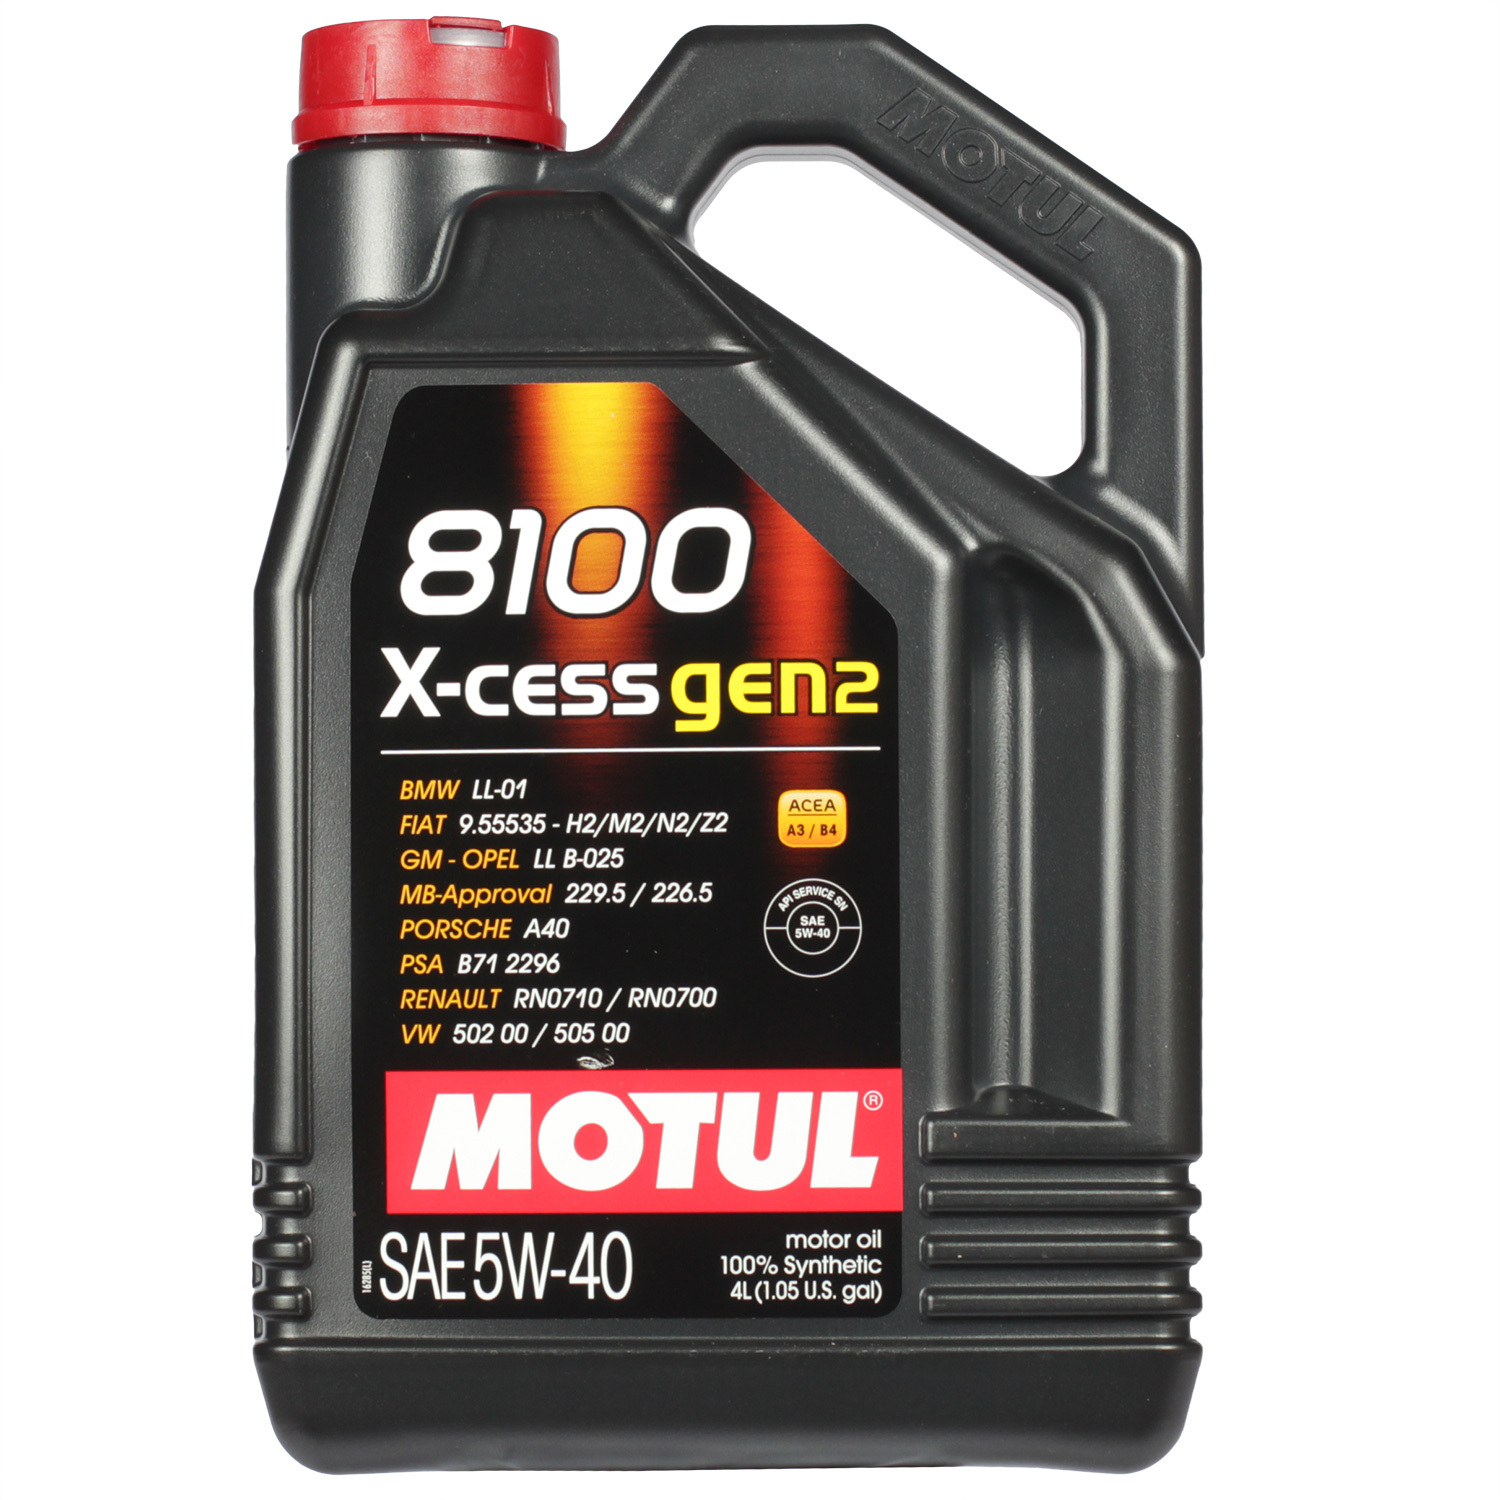 Motul Моторное масло Motul 8100 X-cess gen2 5W-40, 4 л масло моторное motul 8100 eco clean 5w 30 5 л 101545